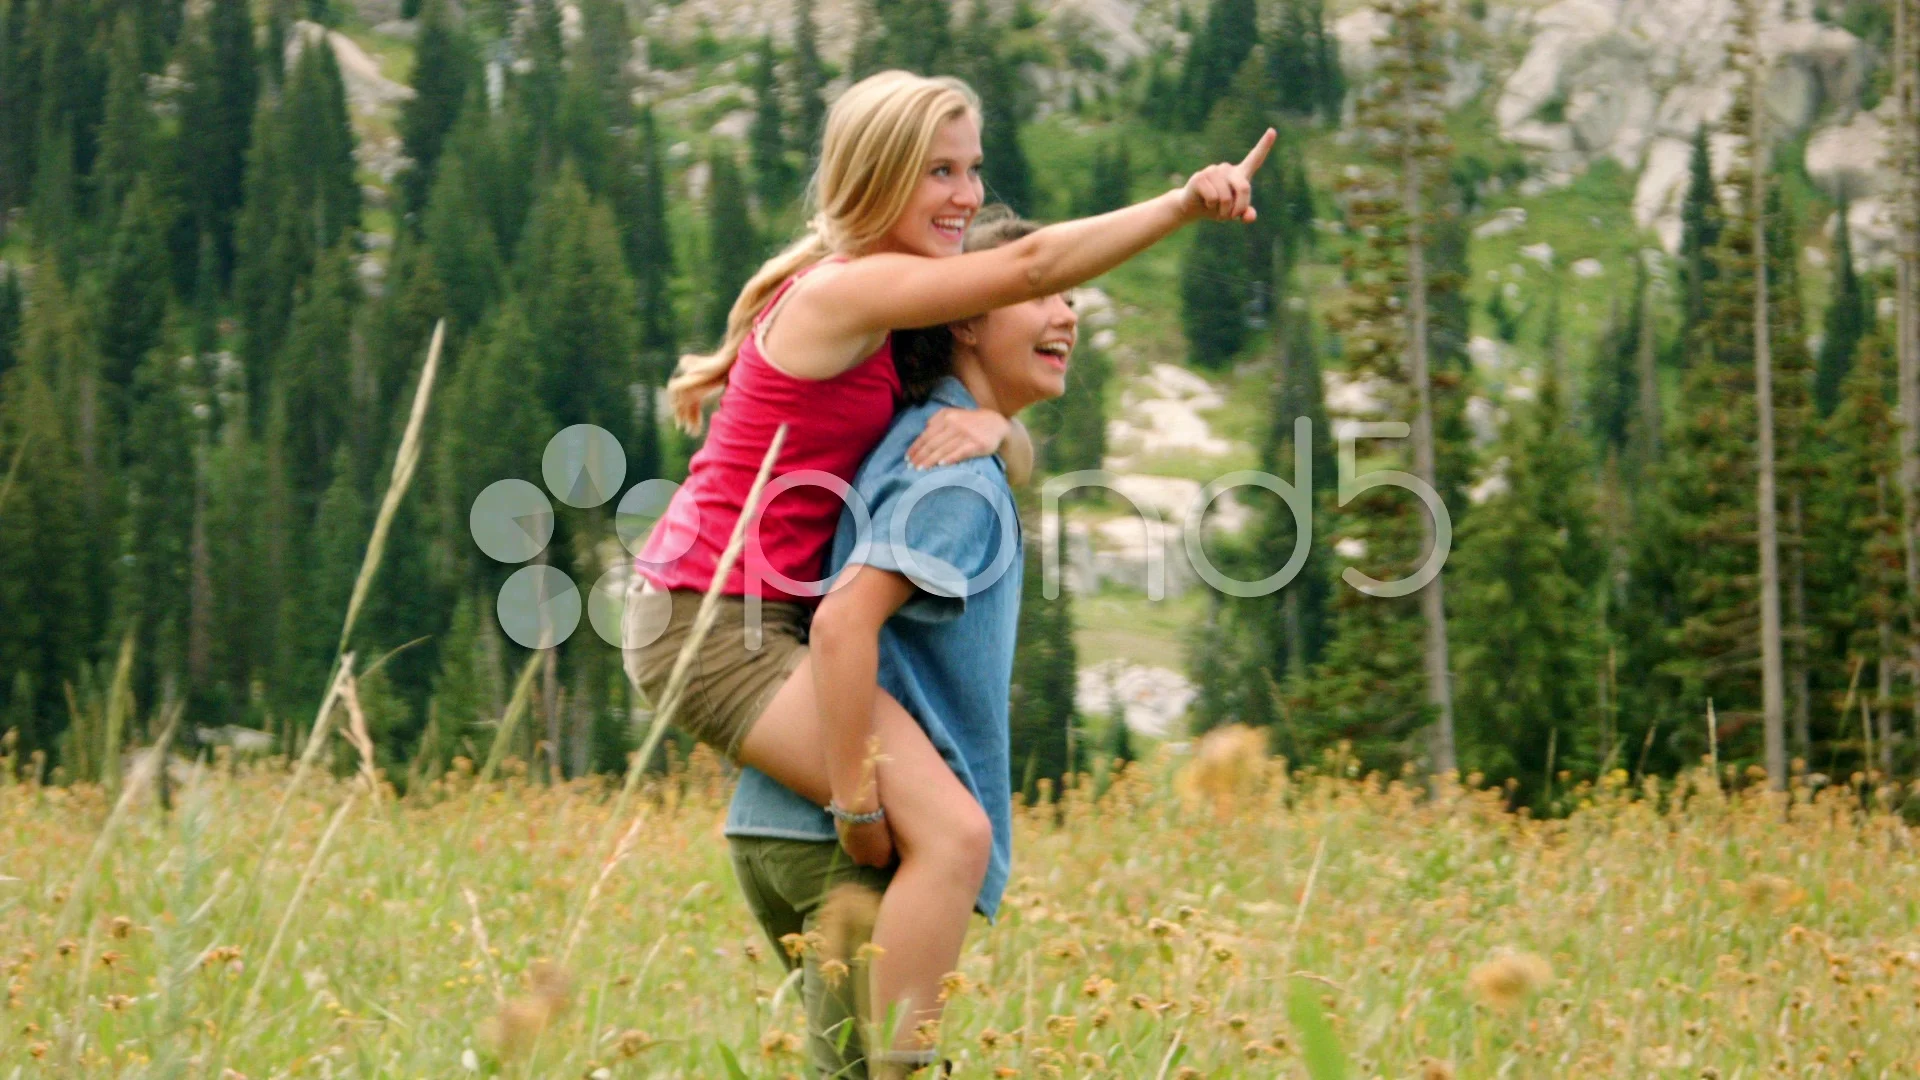 Teenage girl giving friend piggyback ride Stock Photo - Alamy